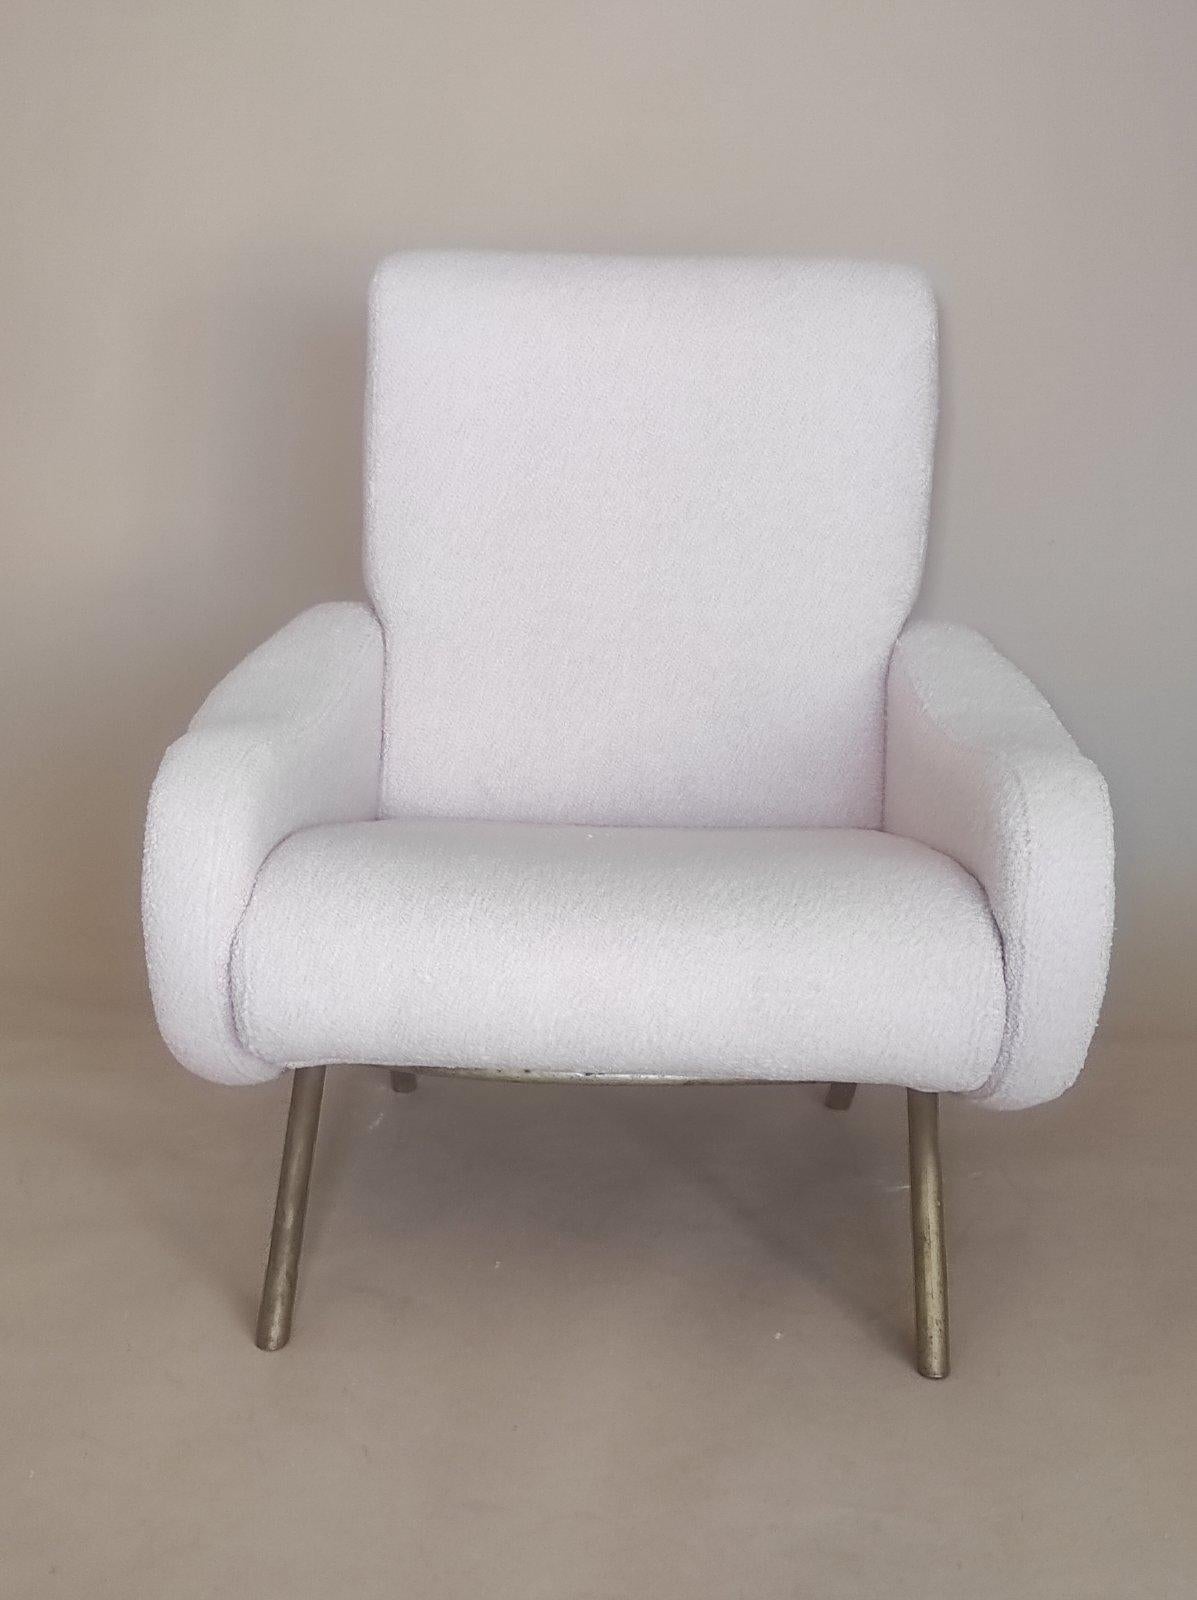 Italian Marco Zanuso Lady Chair 1950s For Sale